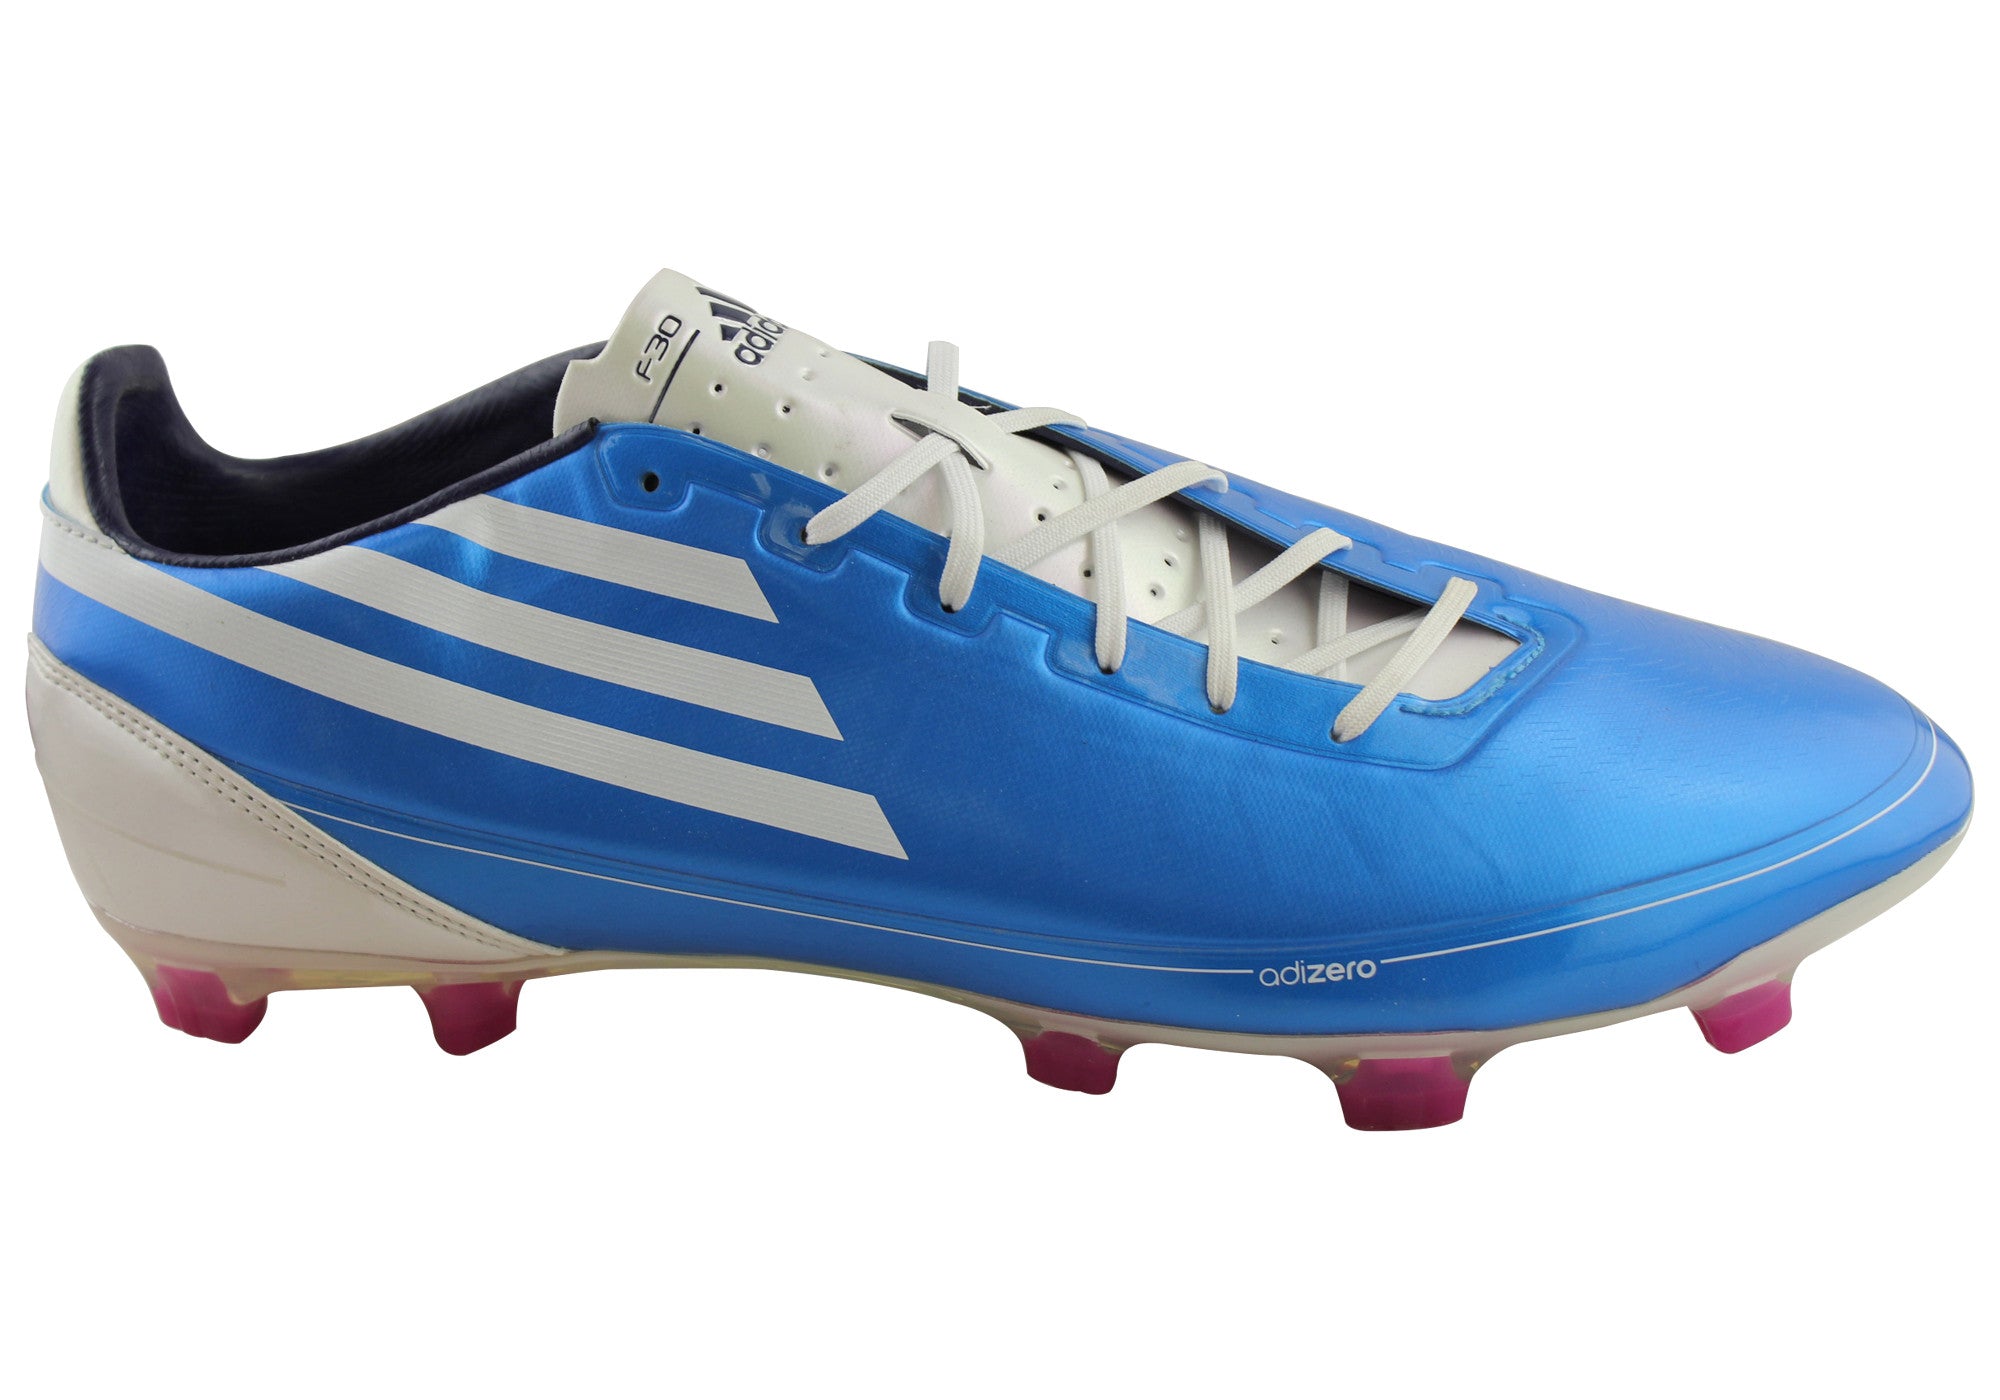 adizero football boots